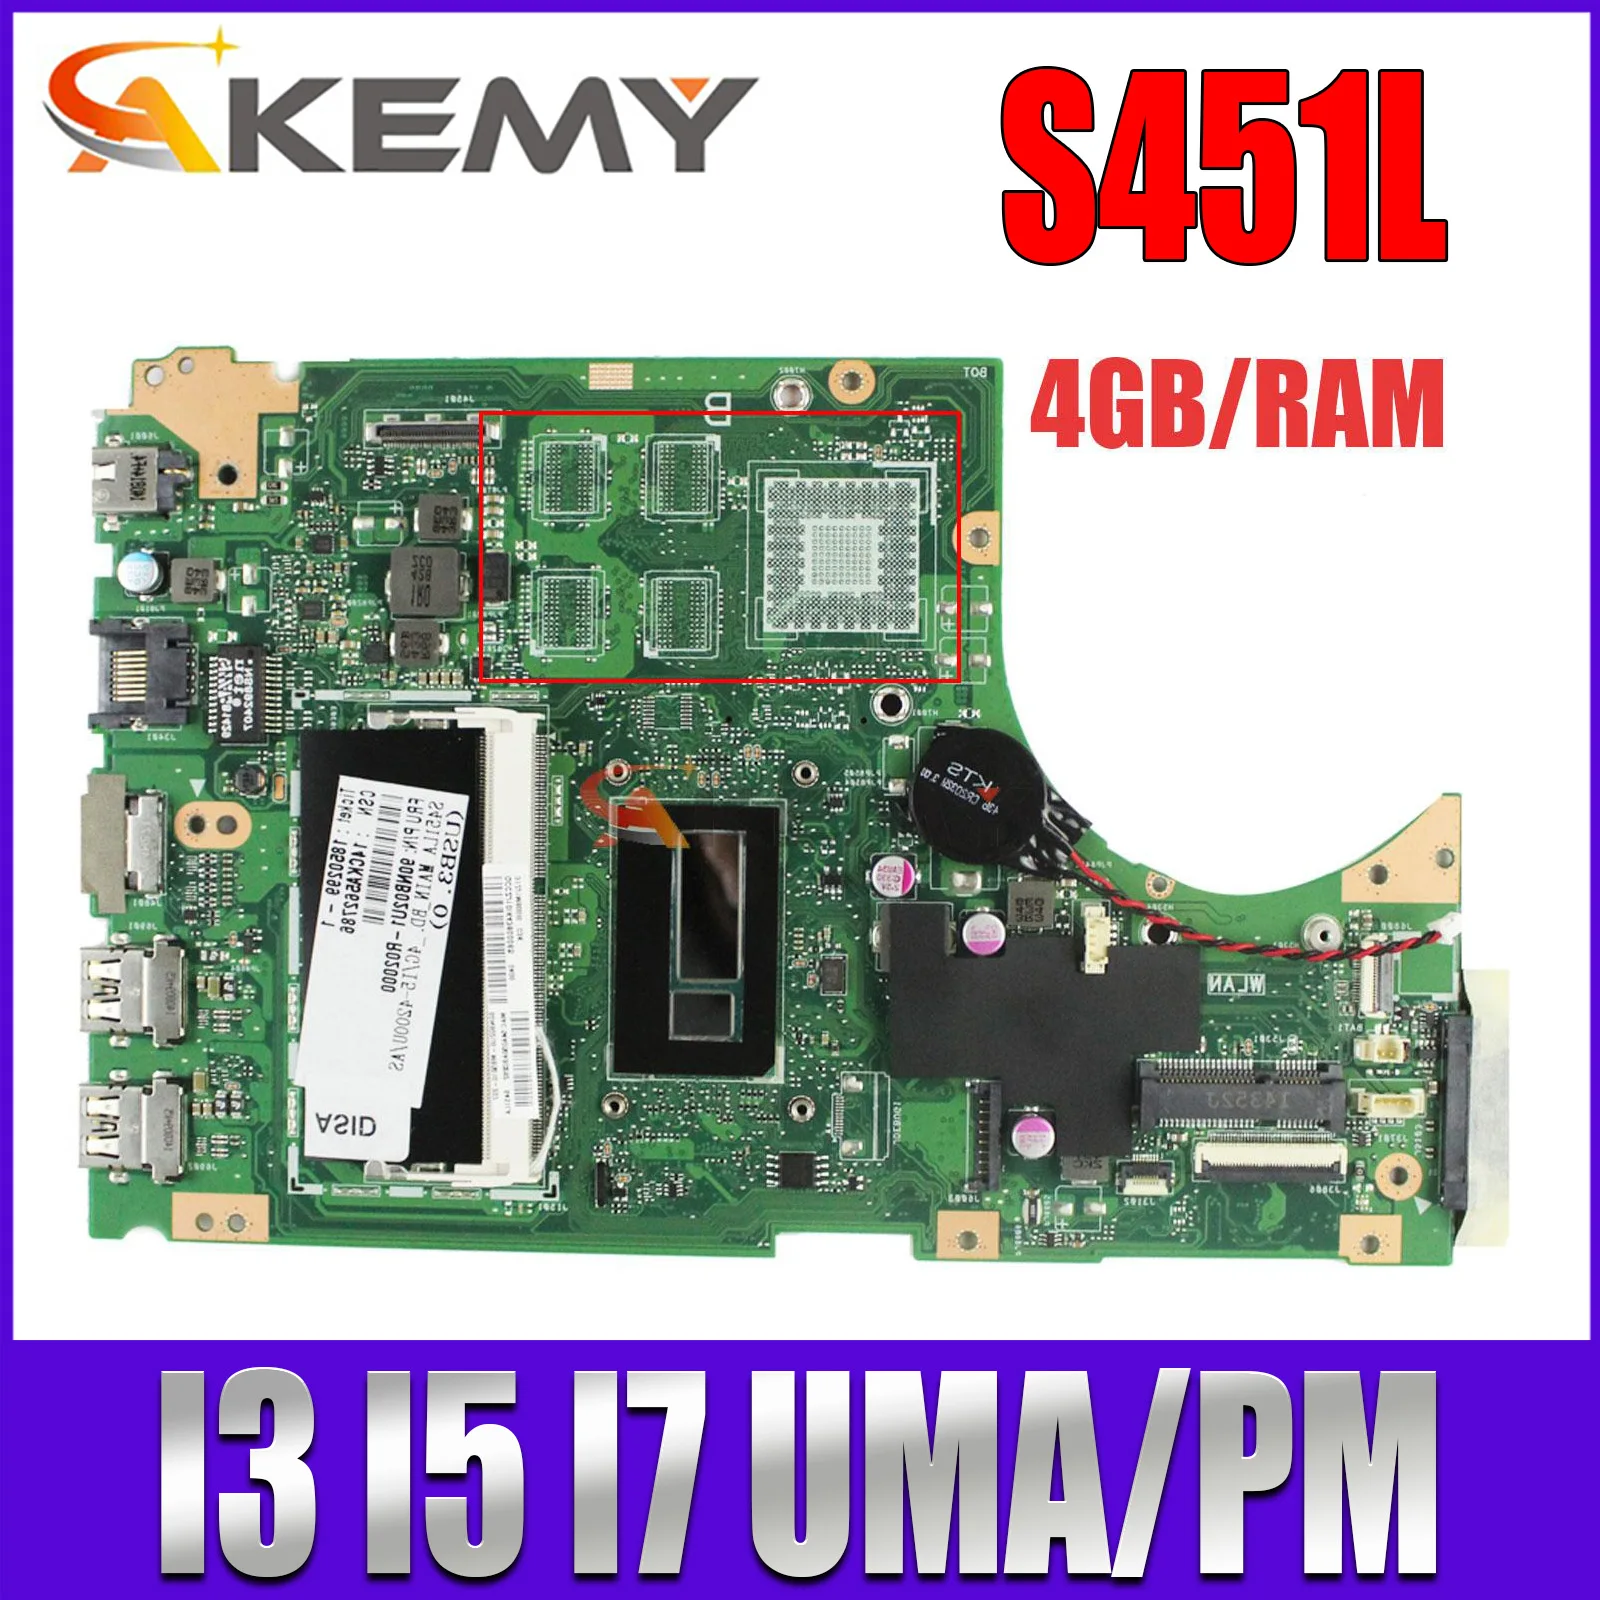 

V451L Mainboard For ASUS S451L S451LN S451LB S451LA S451 R451L K451L Laptop Motherboard With i3 i5 i7 UMA/PM 4GB/RAM